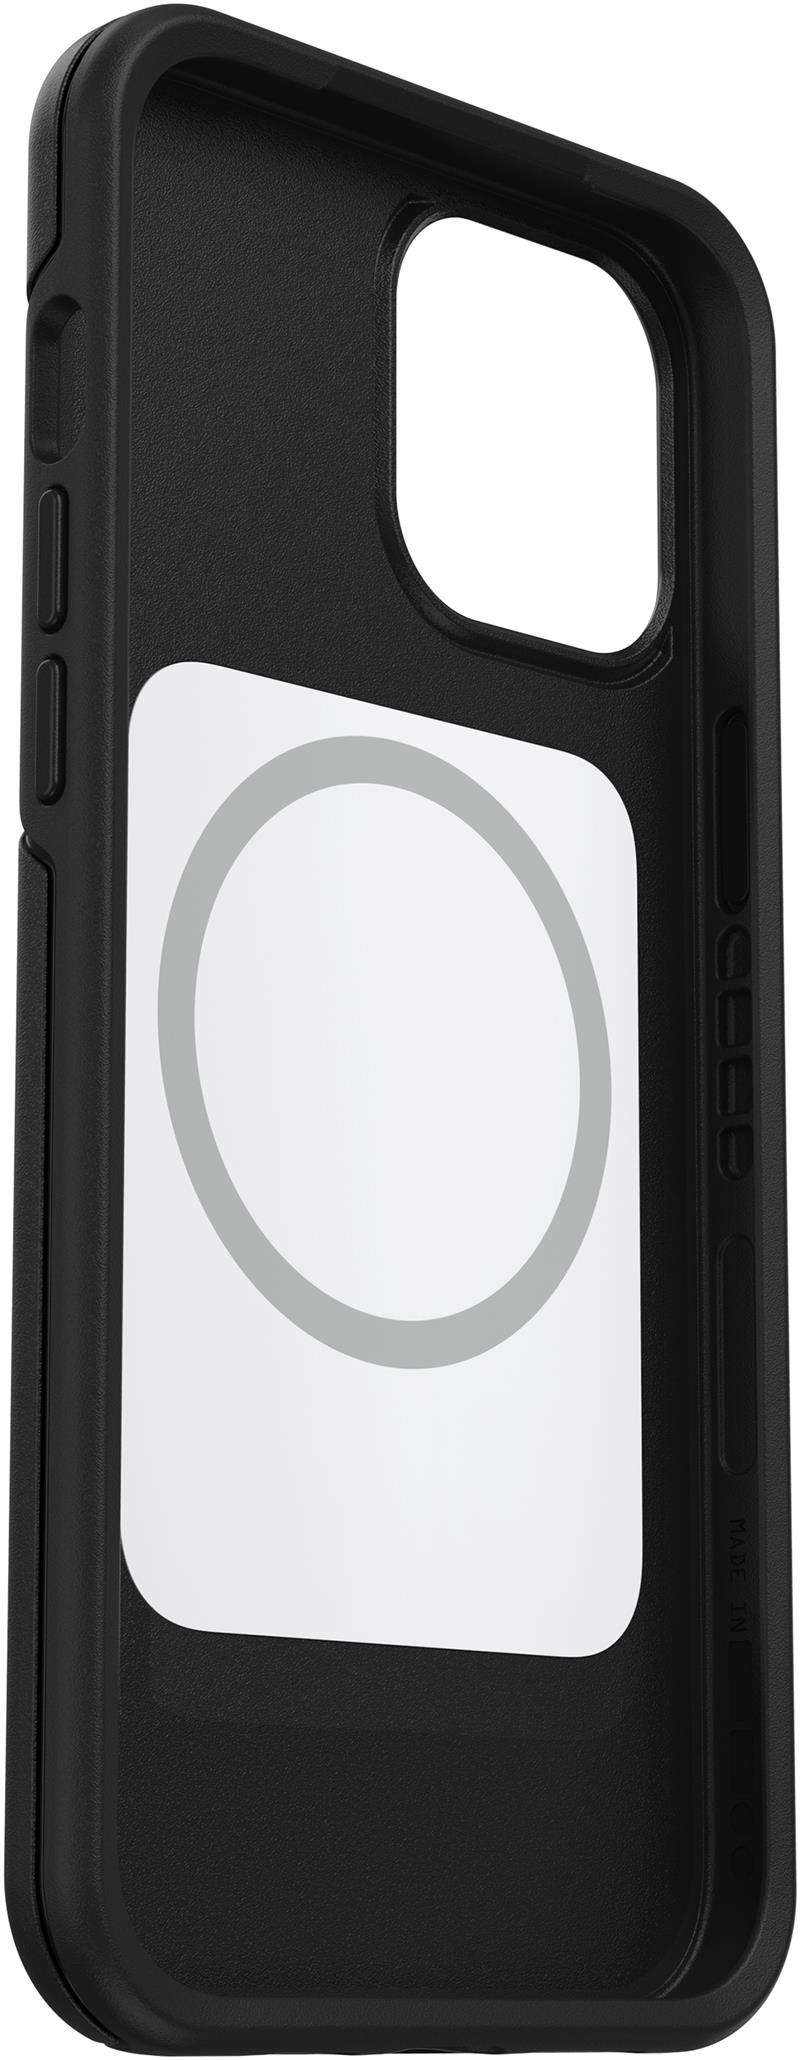 OtterBox Symmetry Case Apple iPhone 12 Pro Max Black